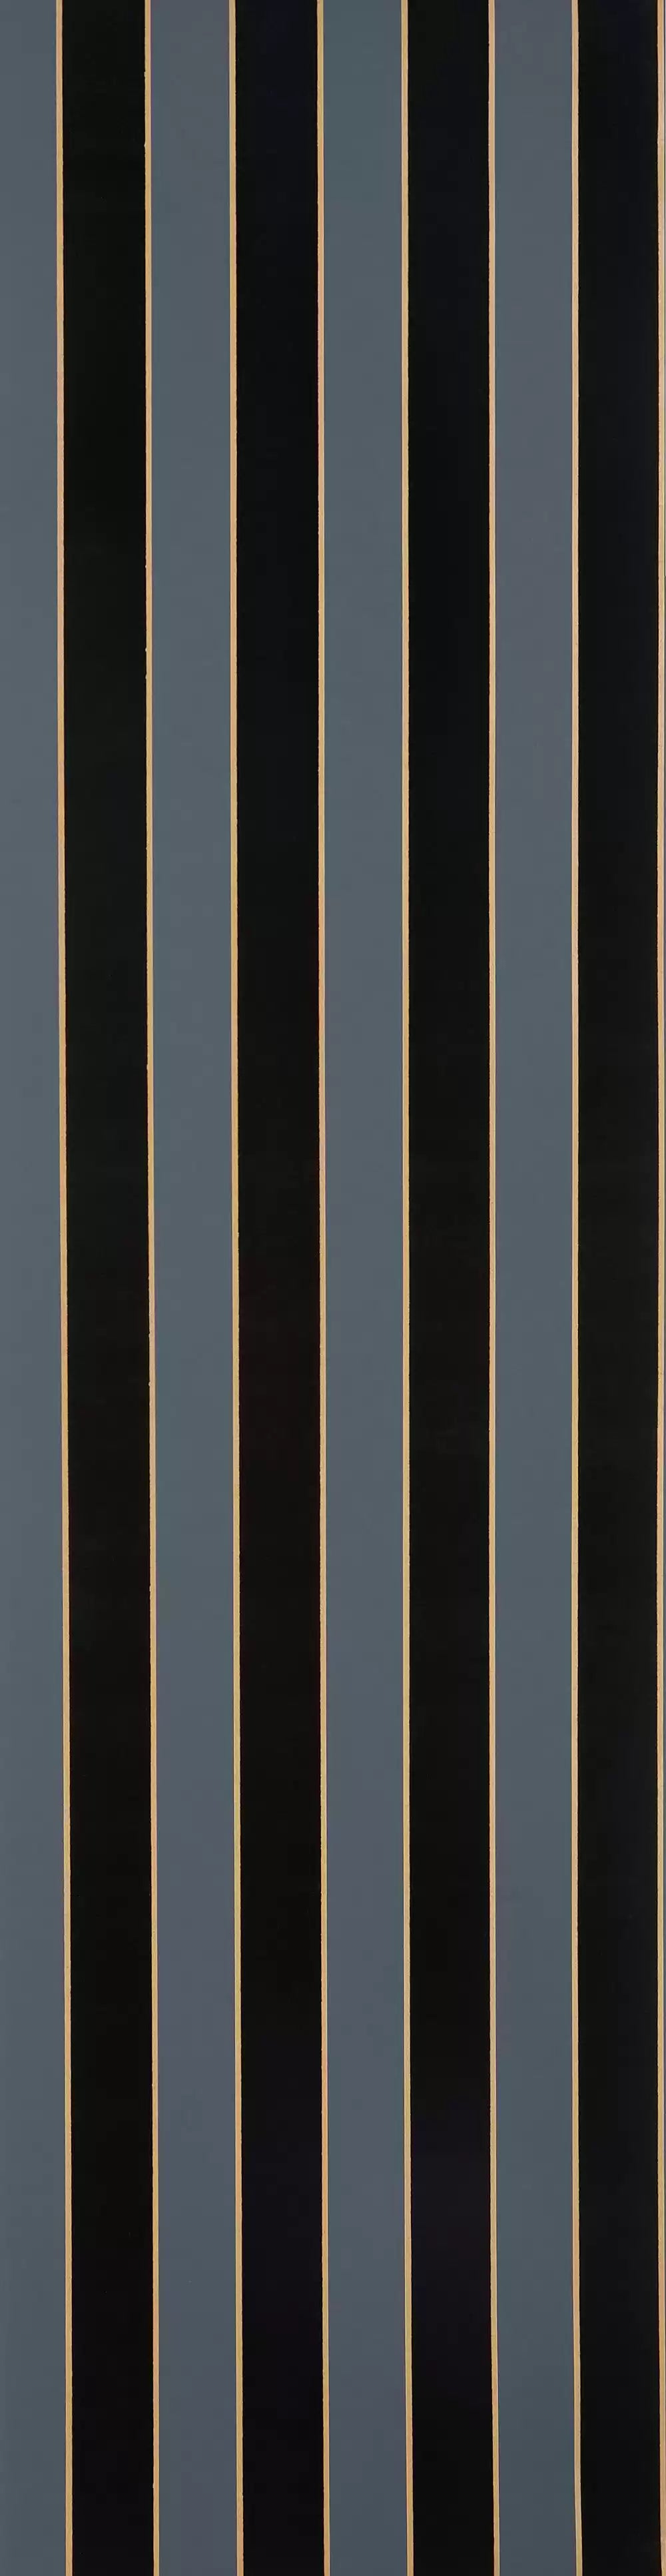 regency-stripe-midnightbronze